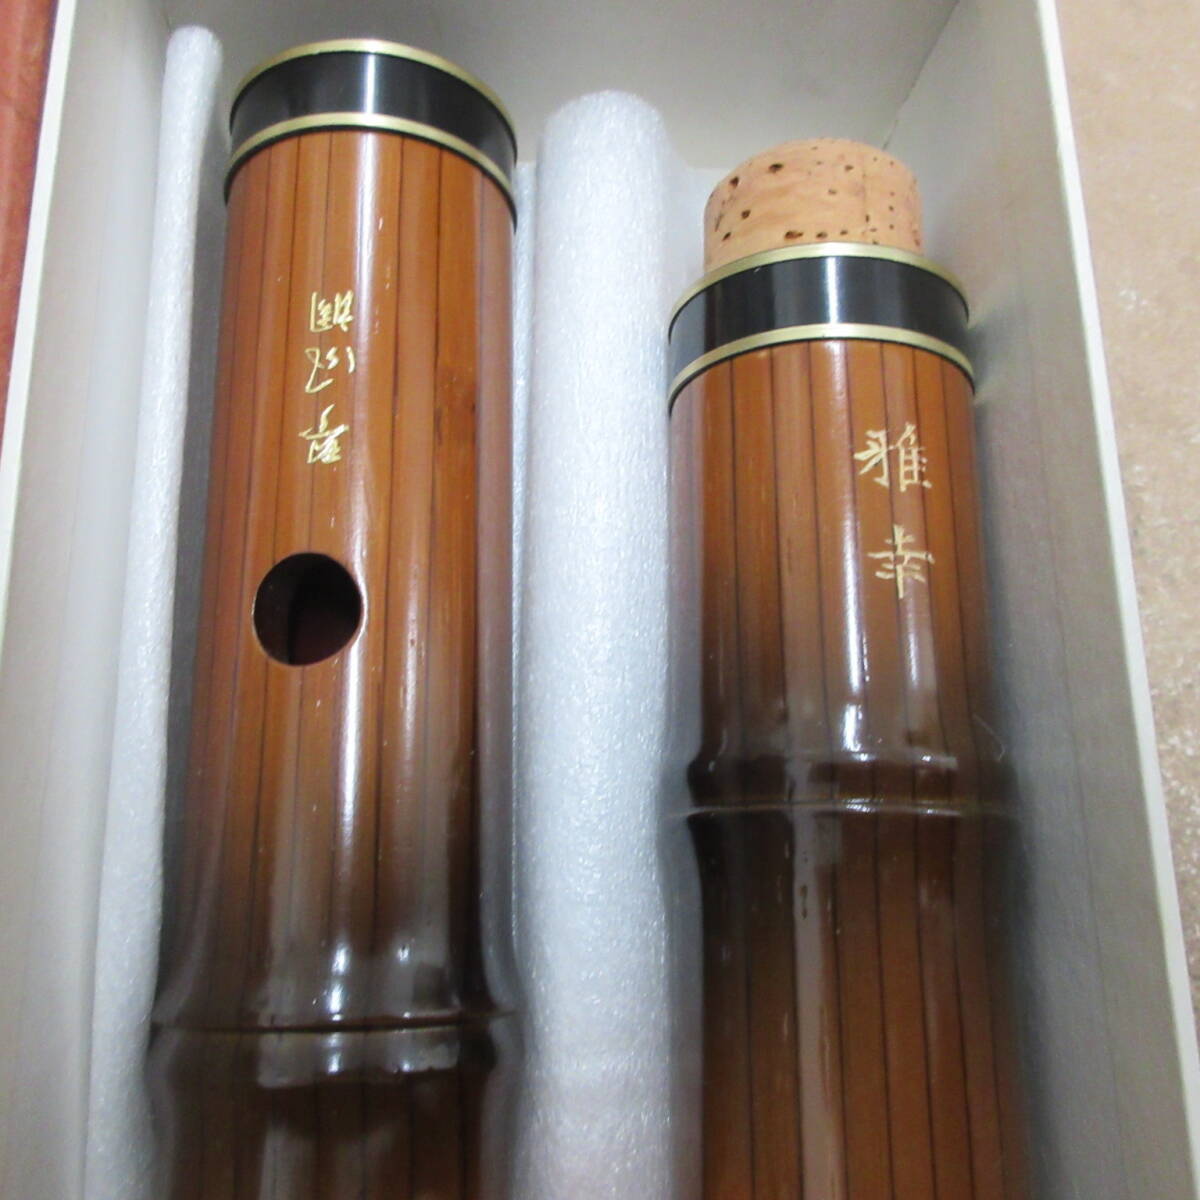  storage goods . xylophone manner shakuhachi traditional Japanese musical instrument . bamboo 1.8 shaku super-discount 1 jpy start 